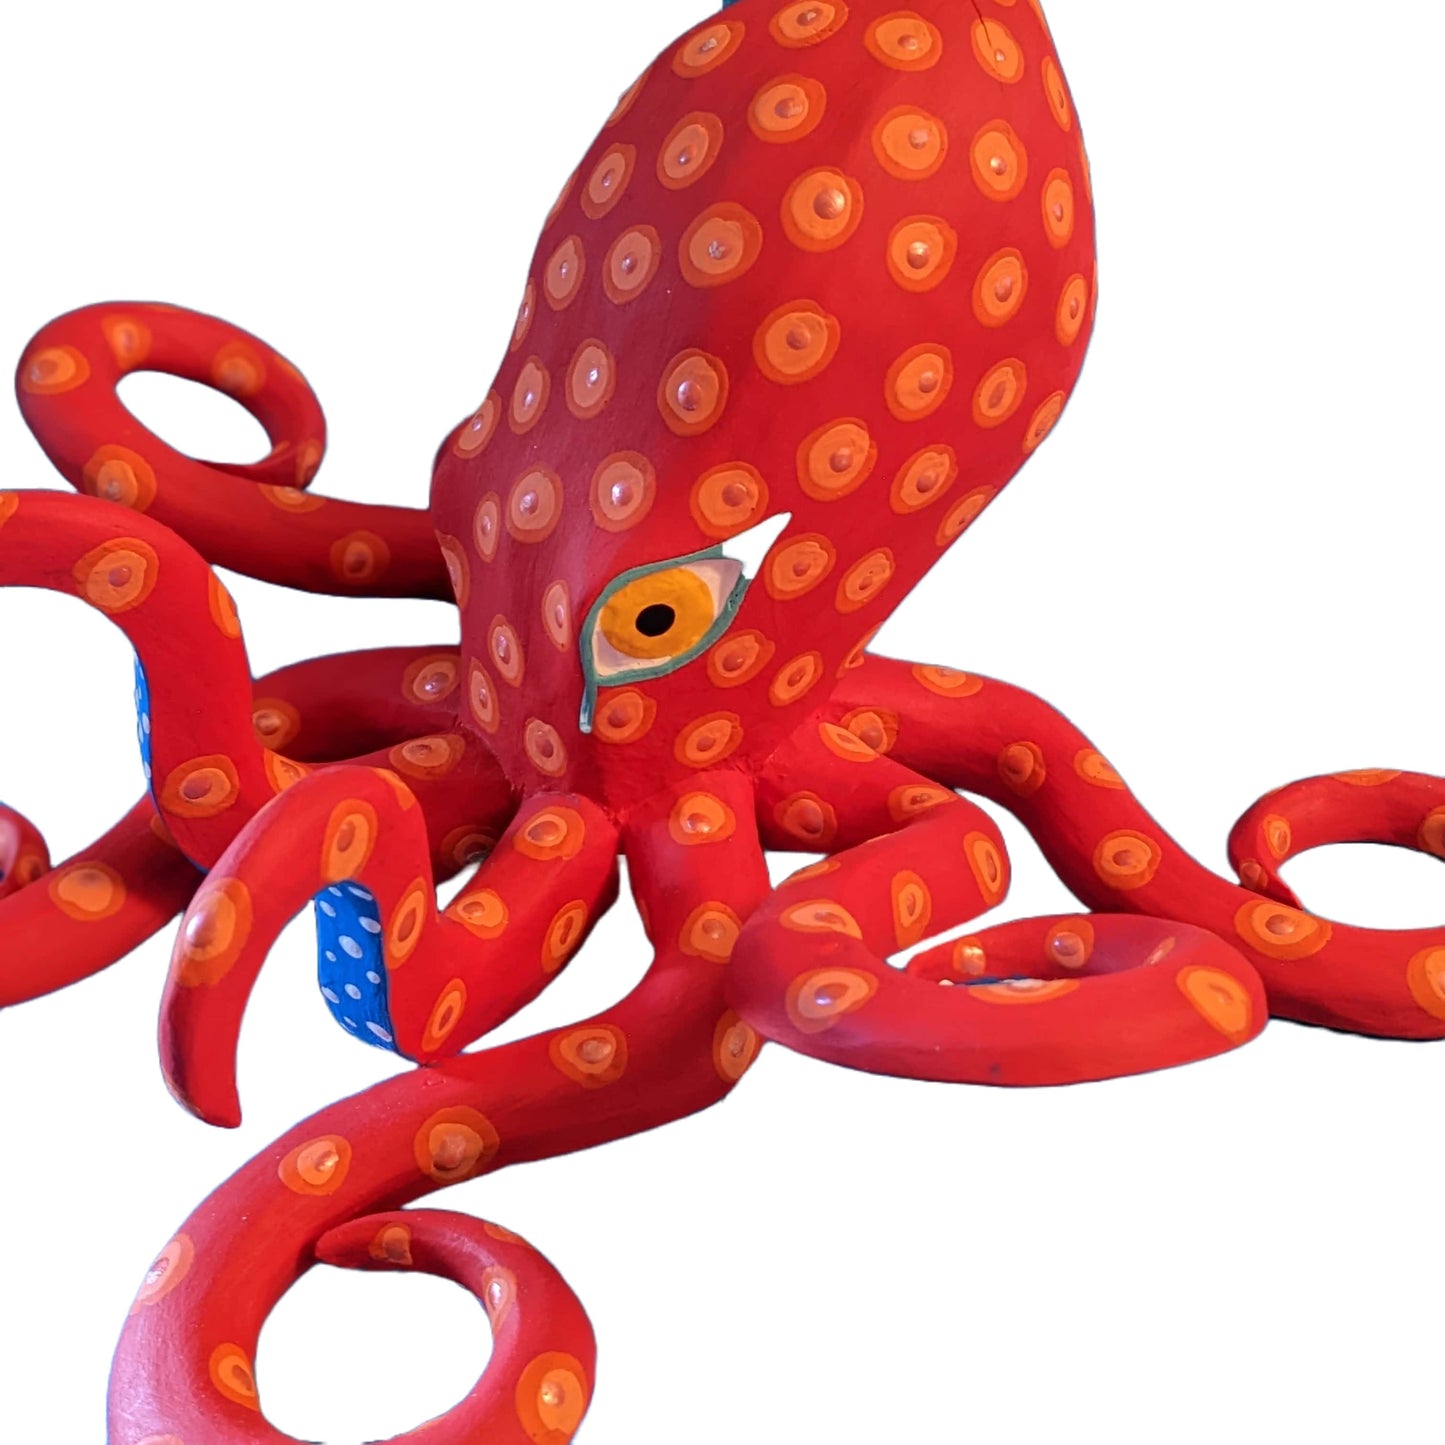 Show Stopper Octopus Alebrije